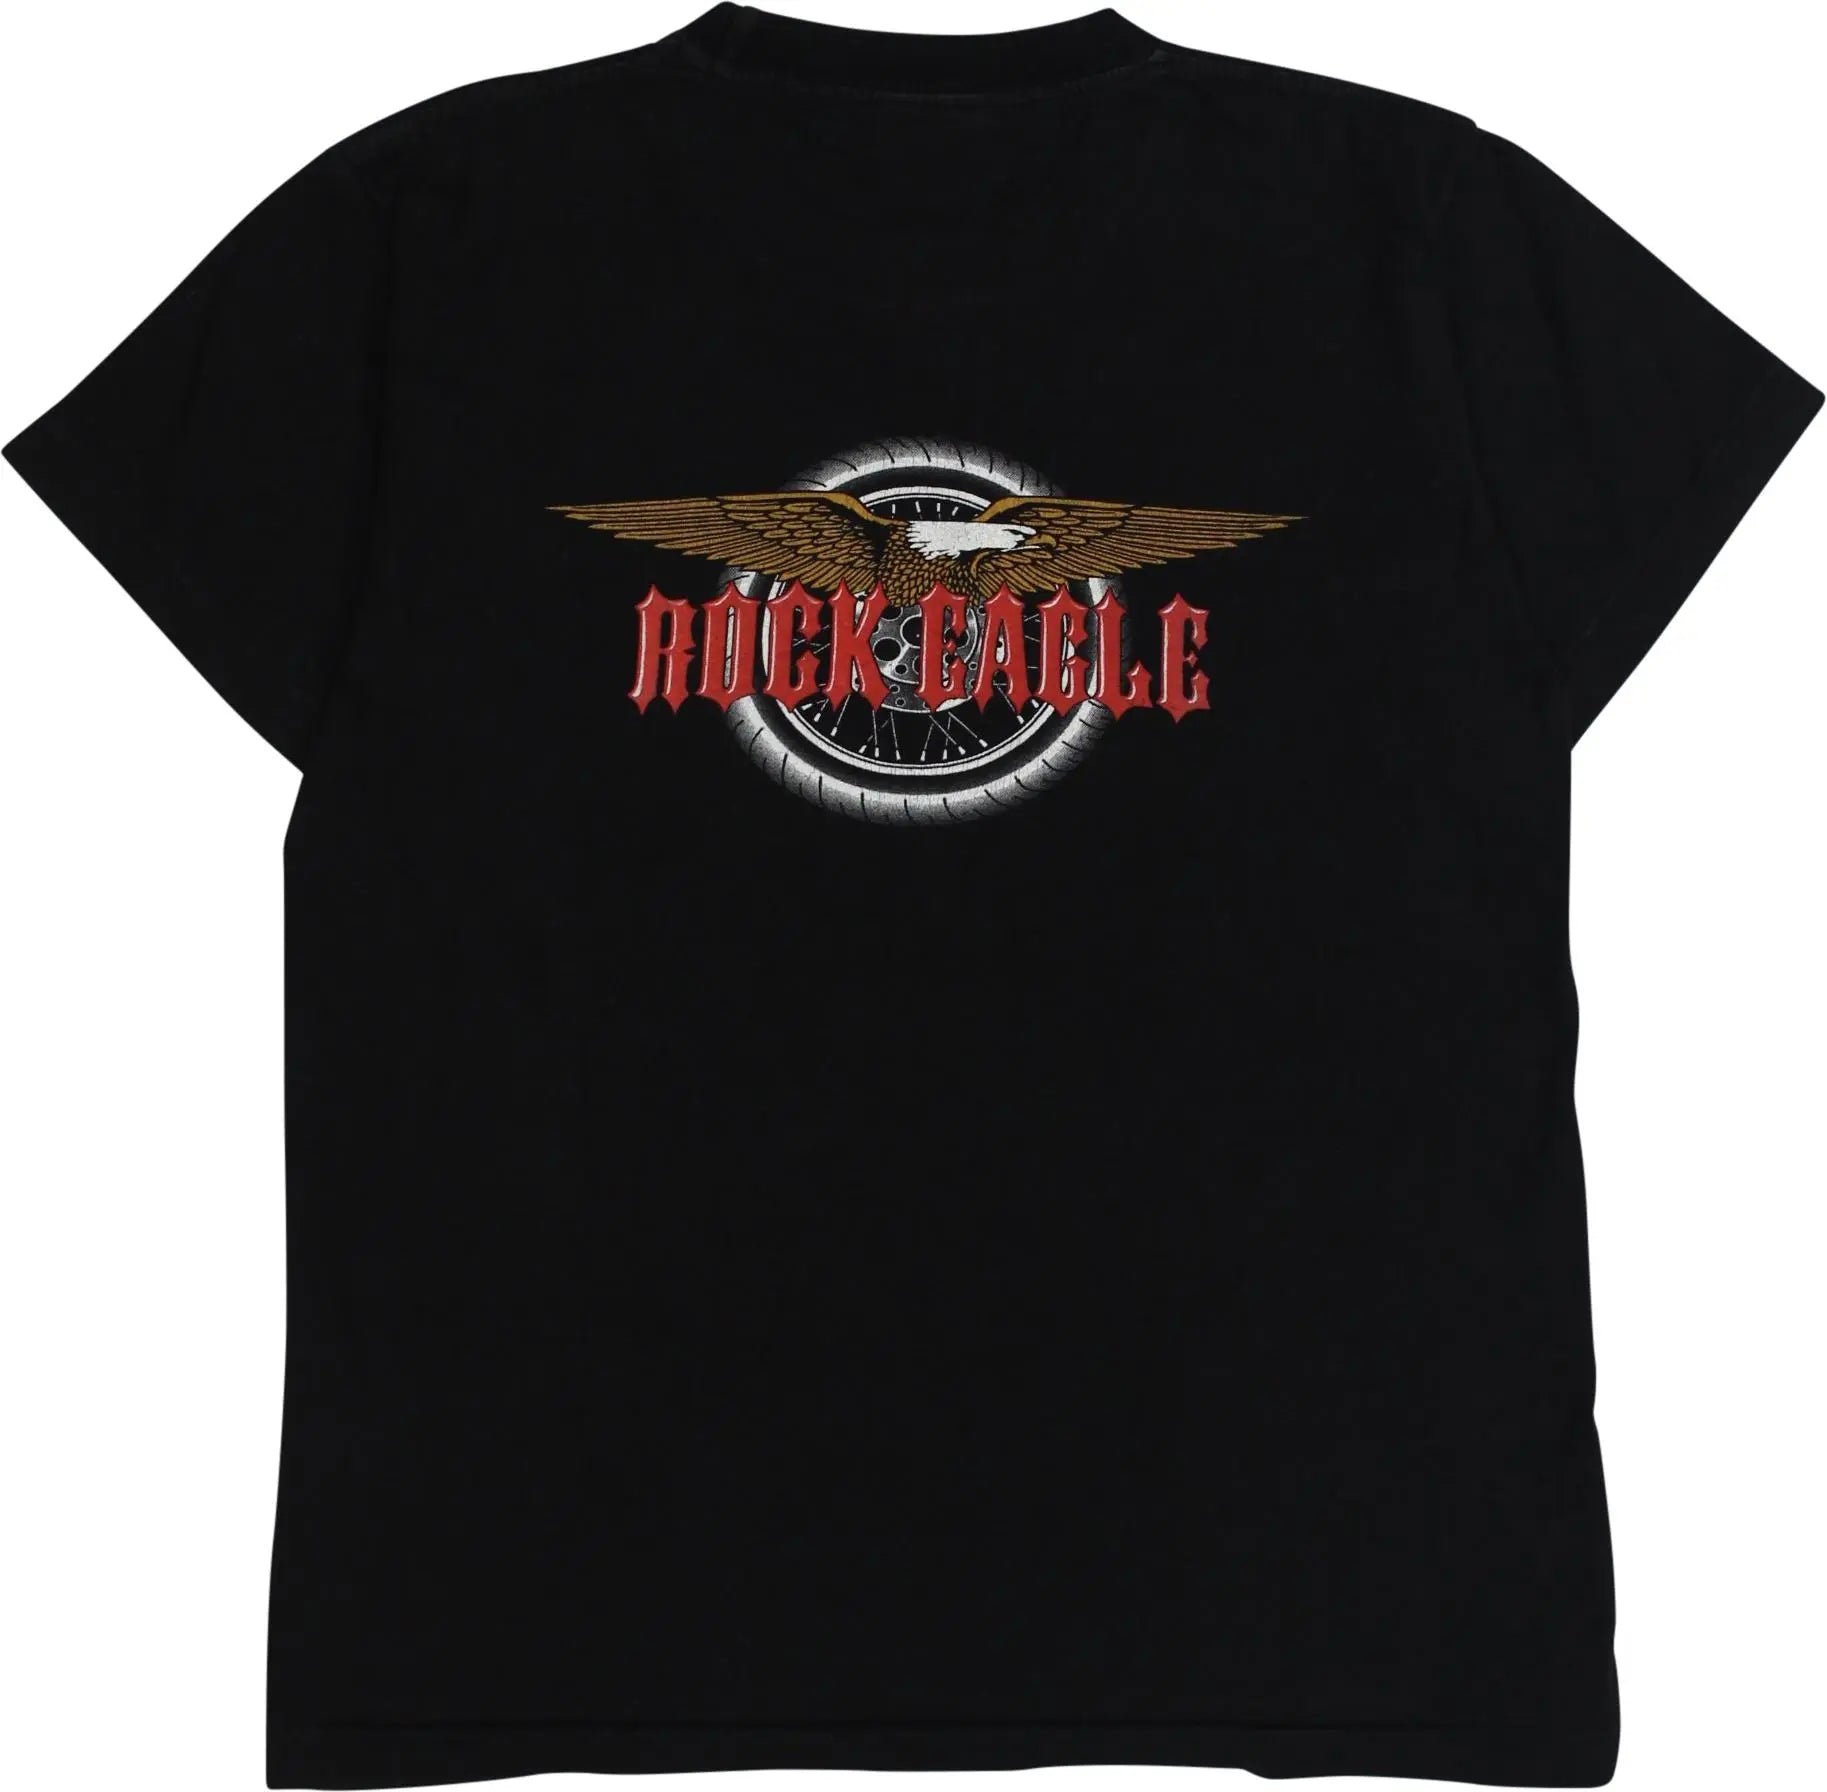 Rock Eagle - Biker T-Shirt- ThriftTale.com - Vintage and second handclothing